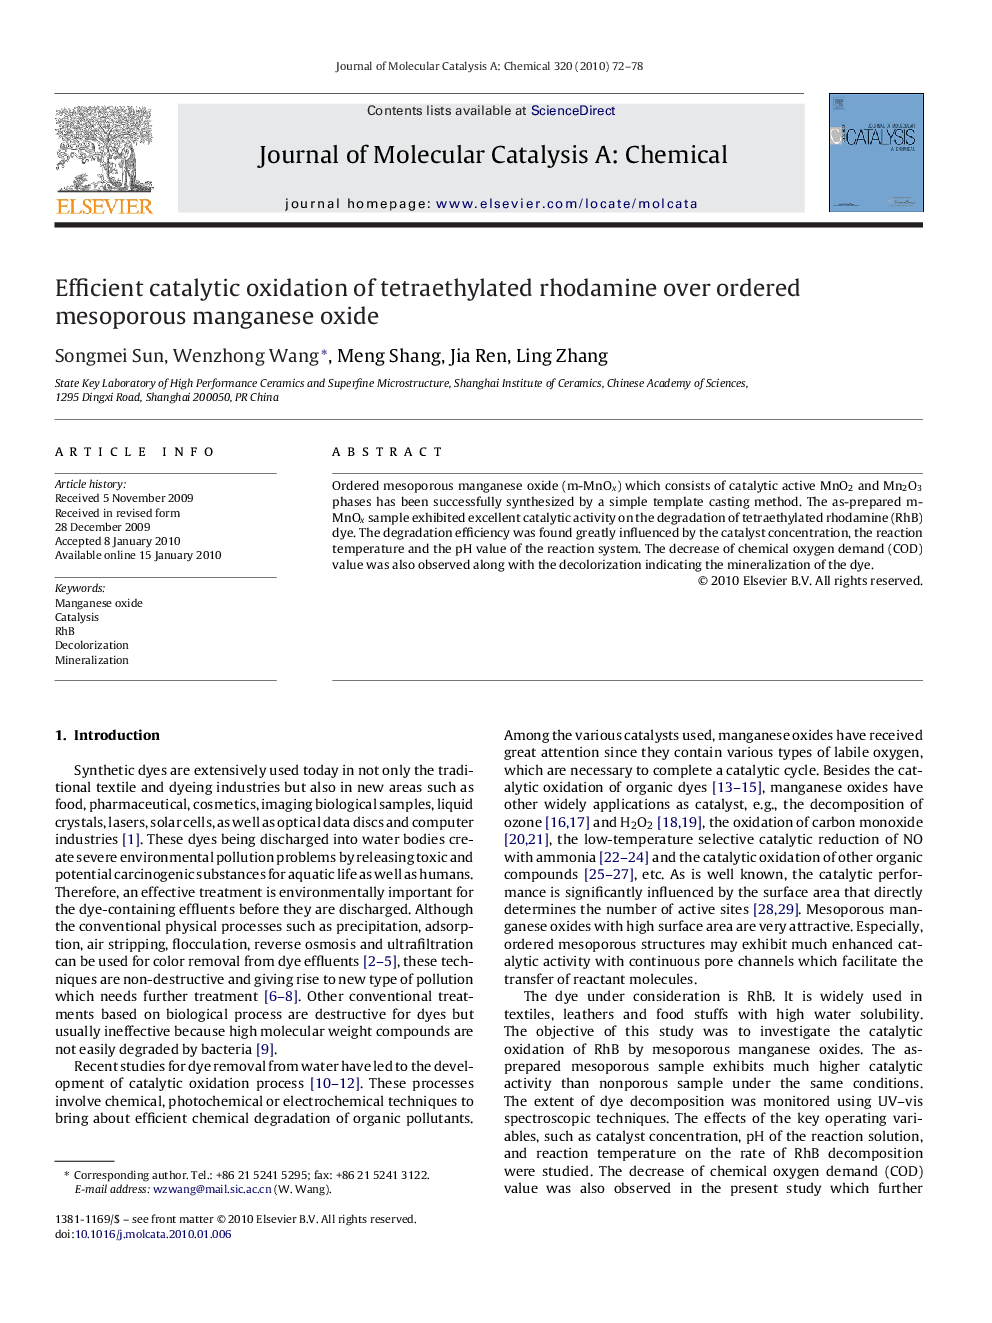 Efficient catalytic oxidation of tetraethylated rhodamine over ordered mesoporous manganese oxide